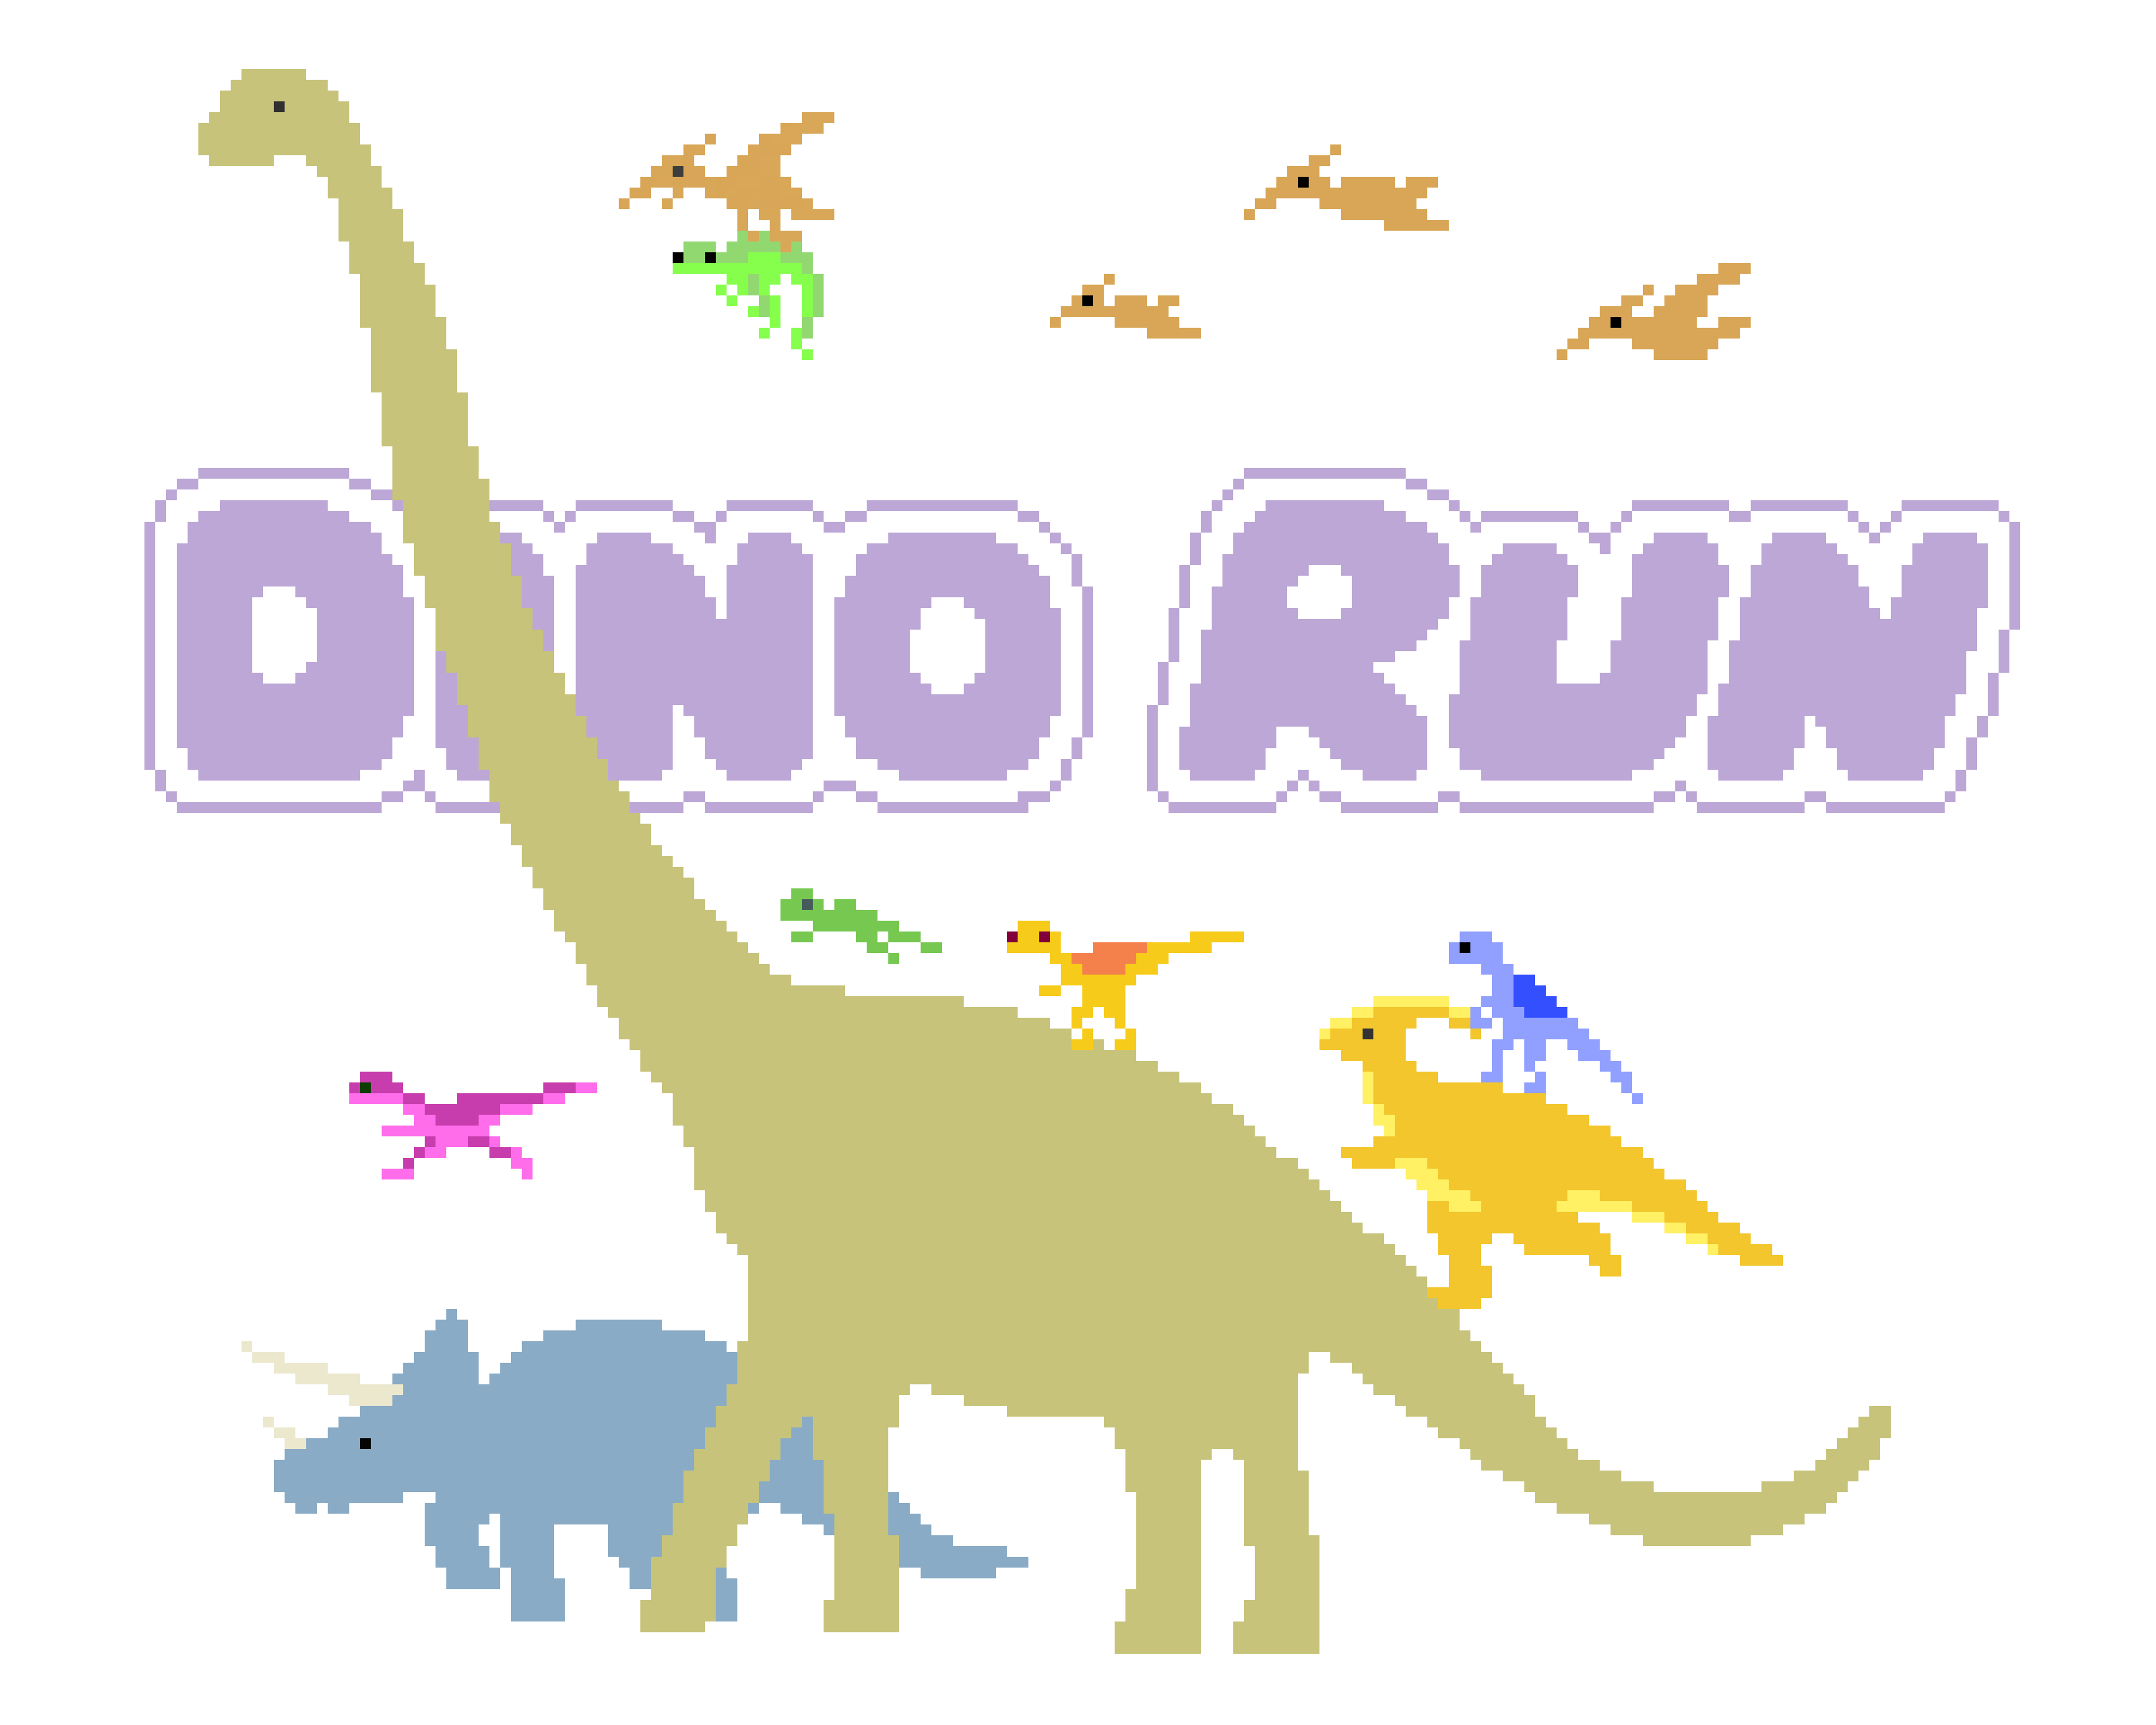 Dino Run 2  Pixel art background, Pixel art, Dinos